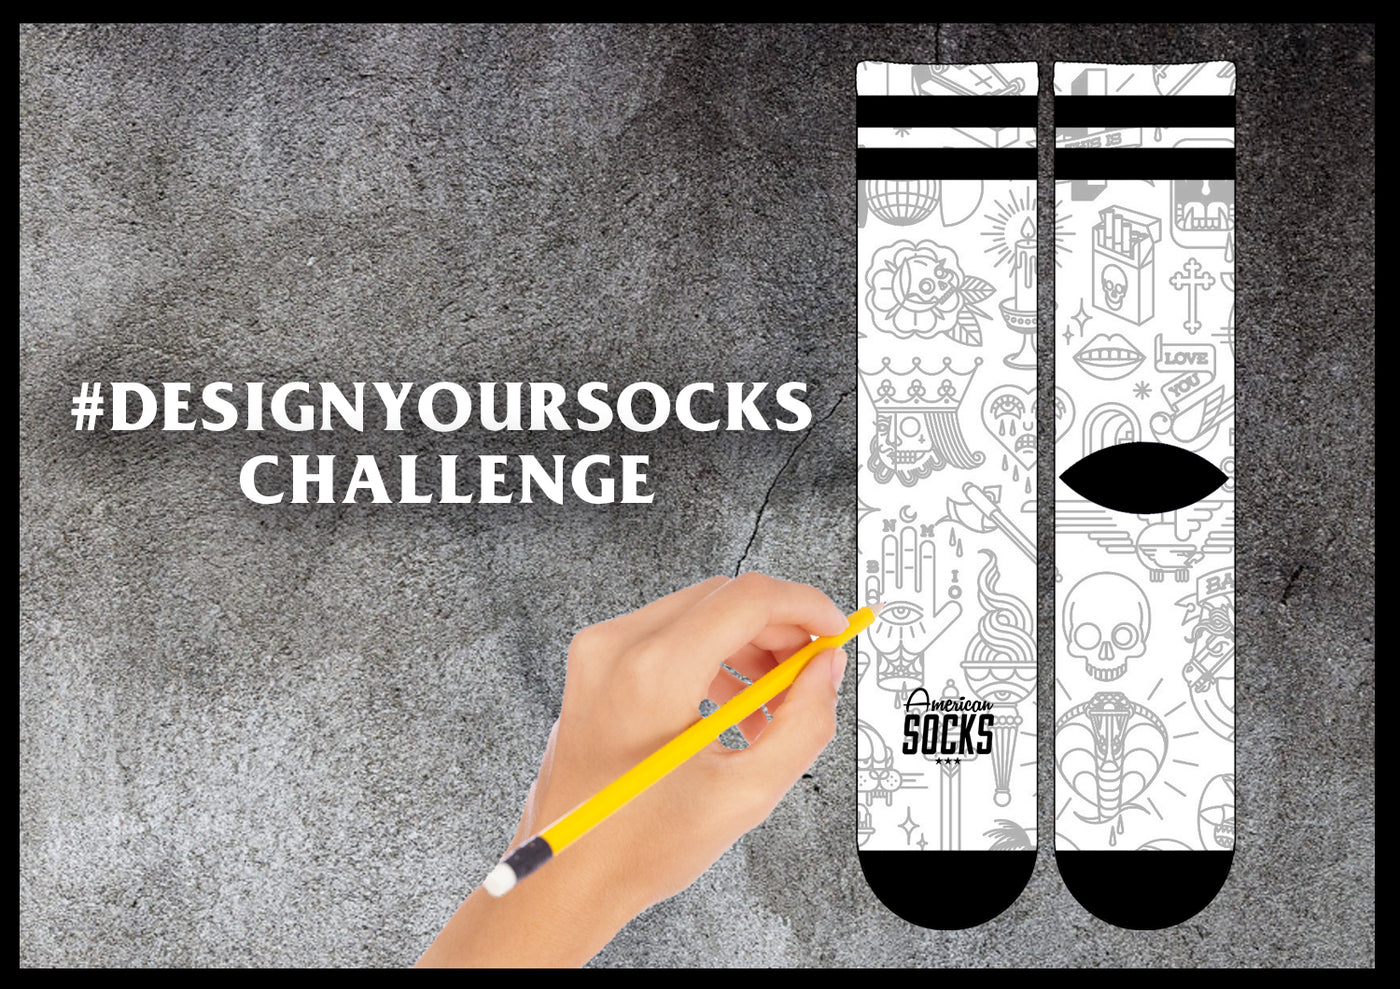 Join the #DesignYourSocks Challenge